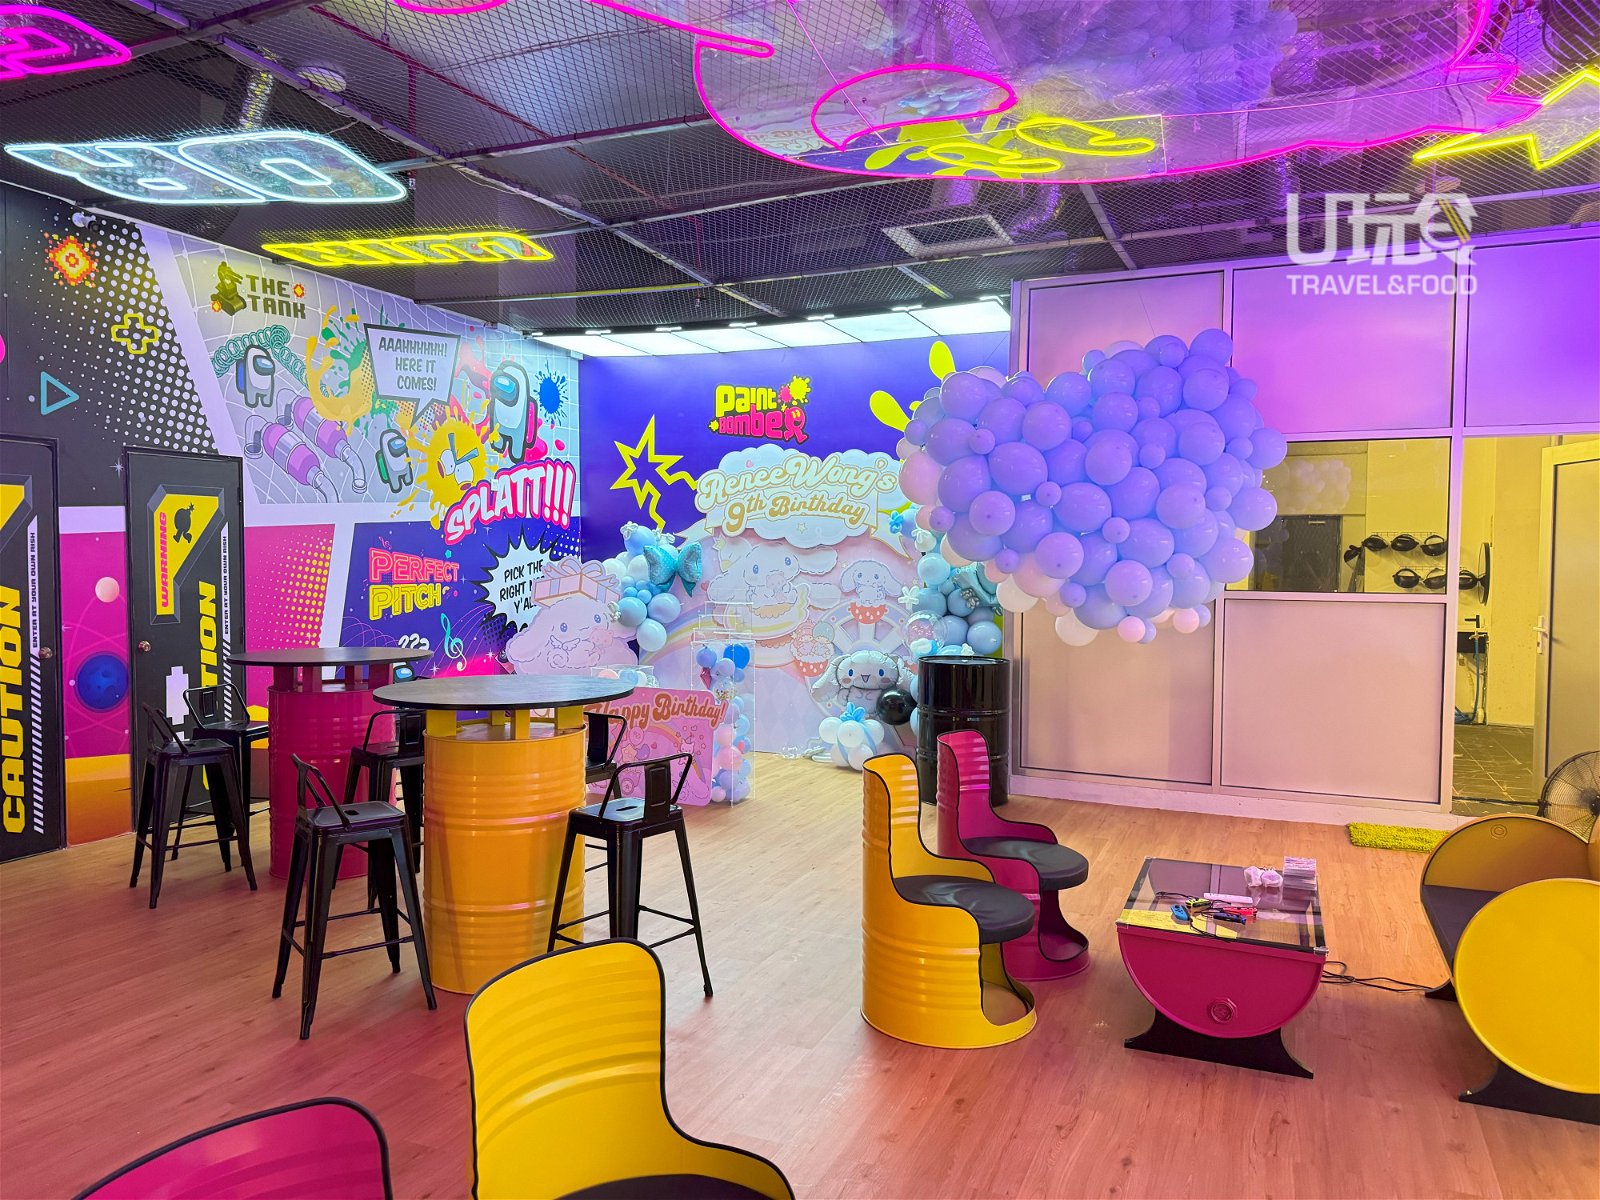 Paint Bomber大厅可供顾客举办派对，并根据喜好制定主题派对。